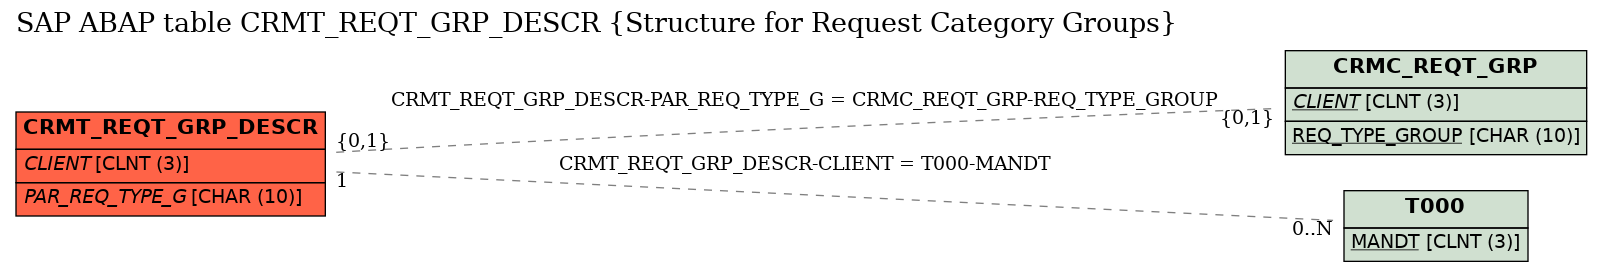 E-R Diagram for table CRMT_REQT_GRP_DESCR (Structure for Request Category Groups)